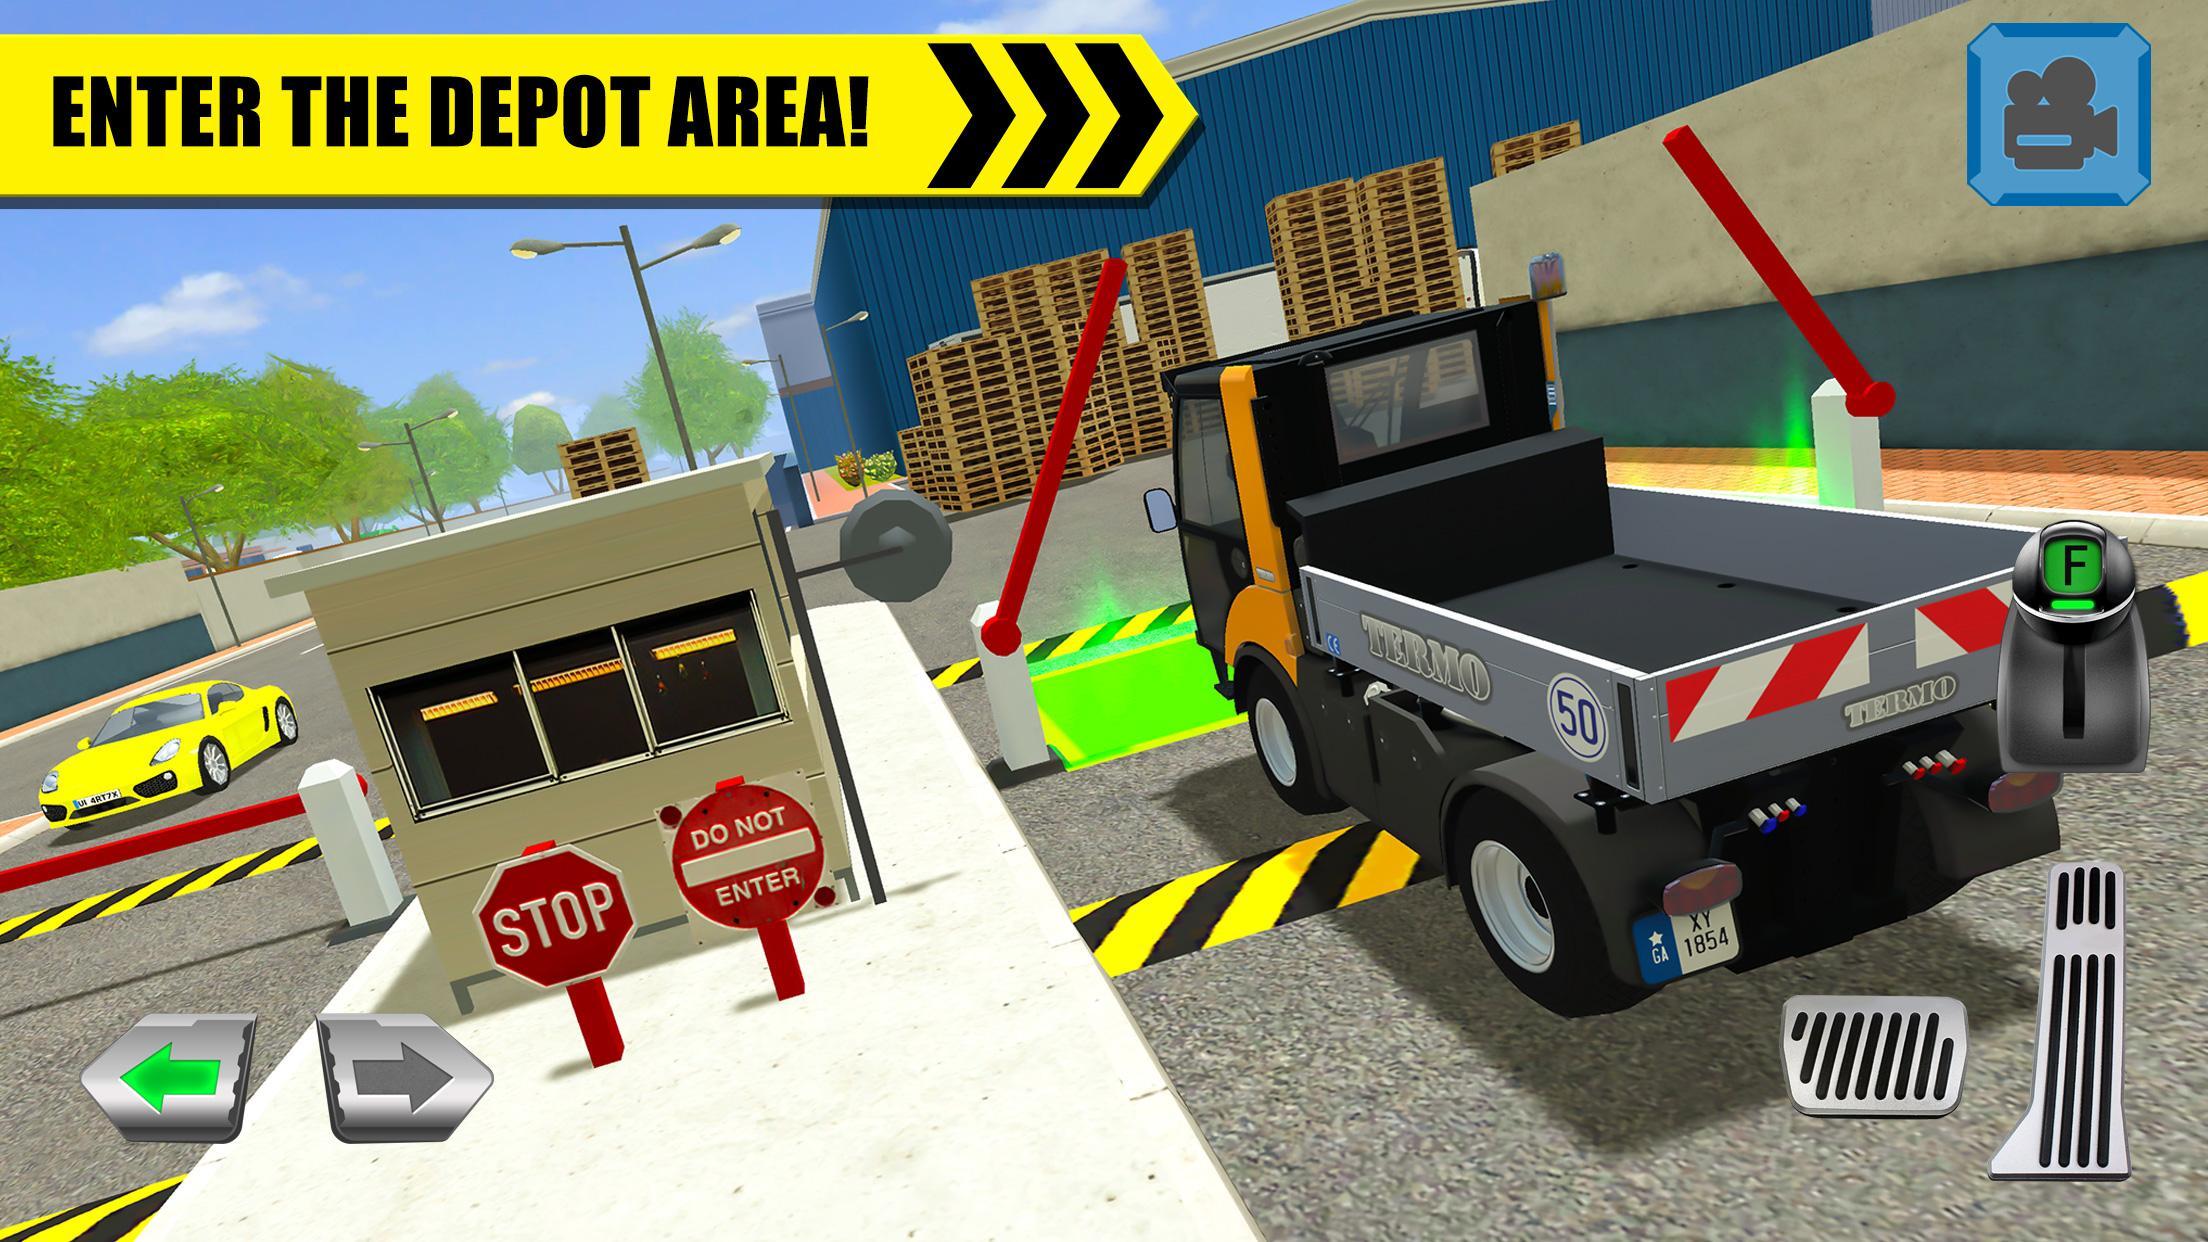 Screenshot 1 of Tsuper ng Truck: Depot Parking Si 1.4